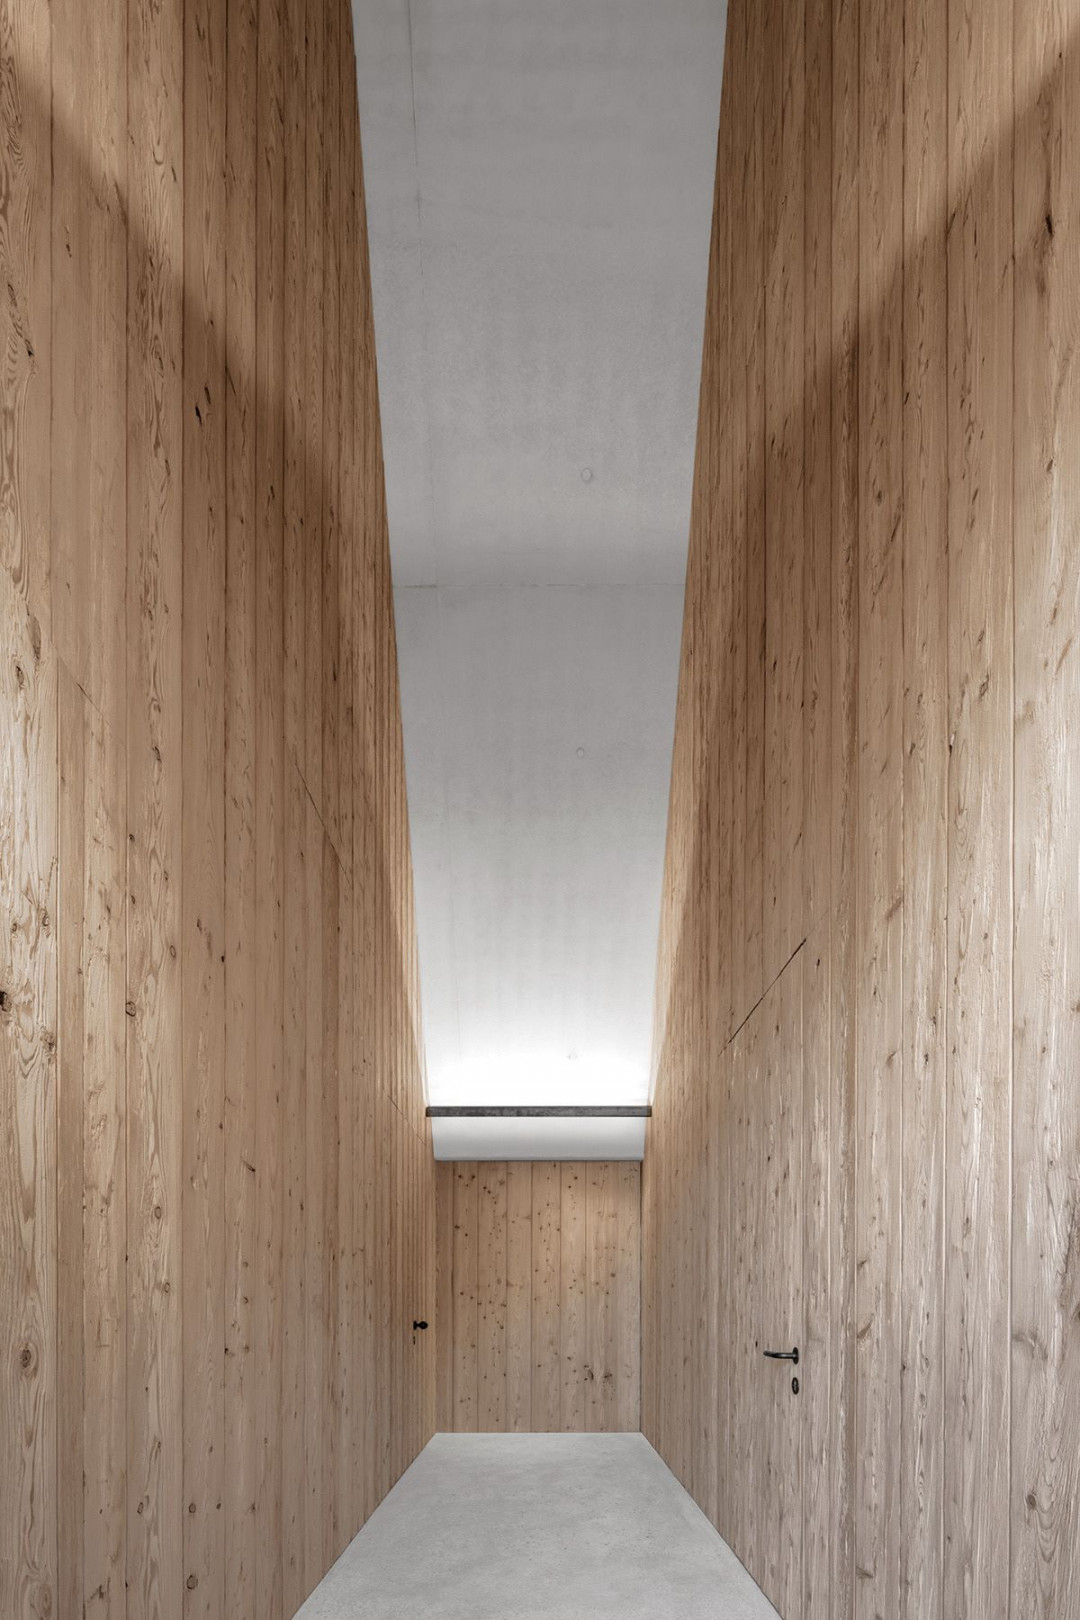 Timber interior cladding